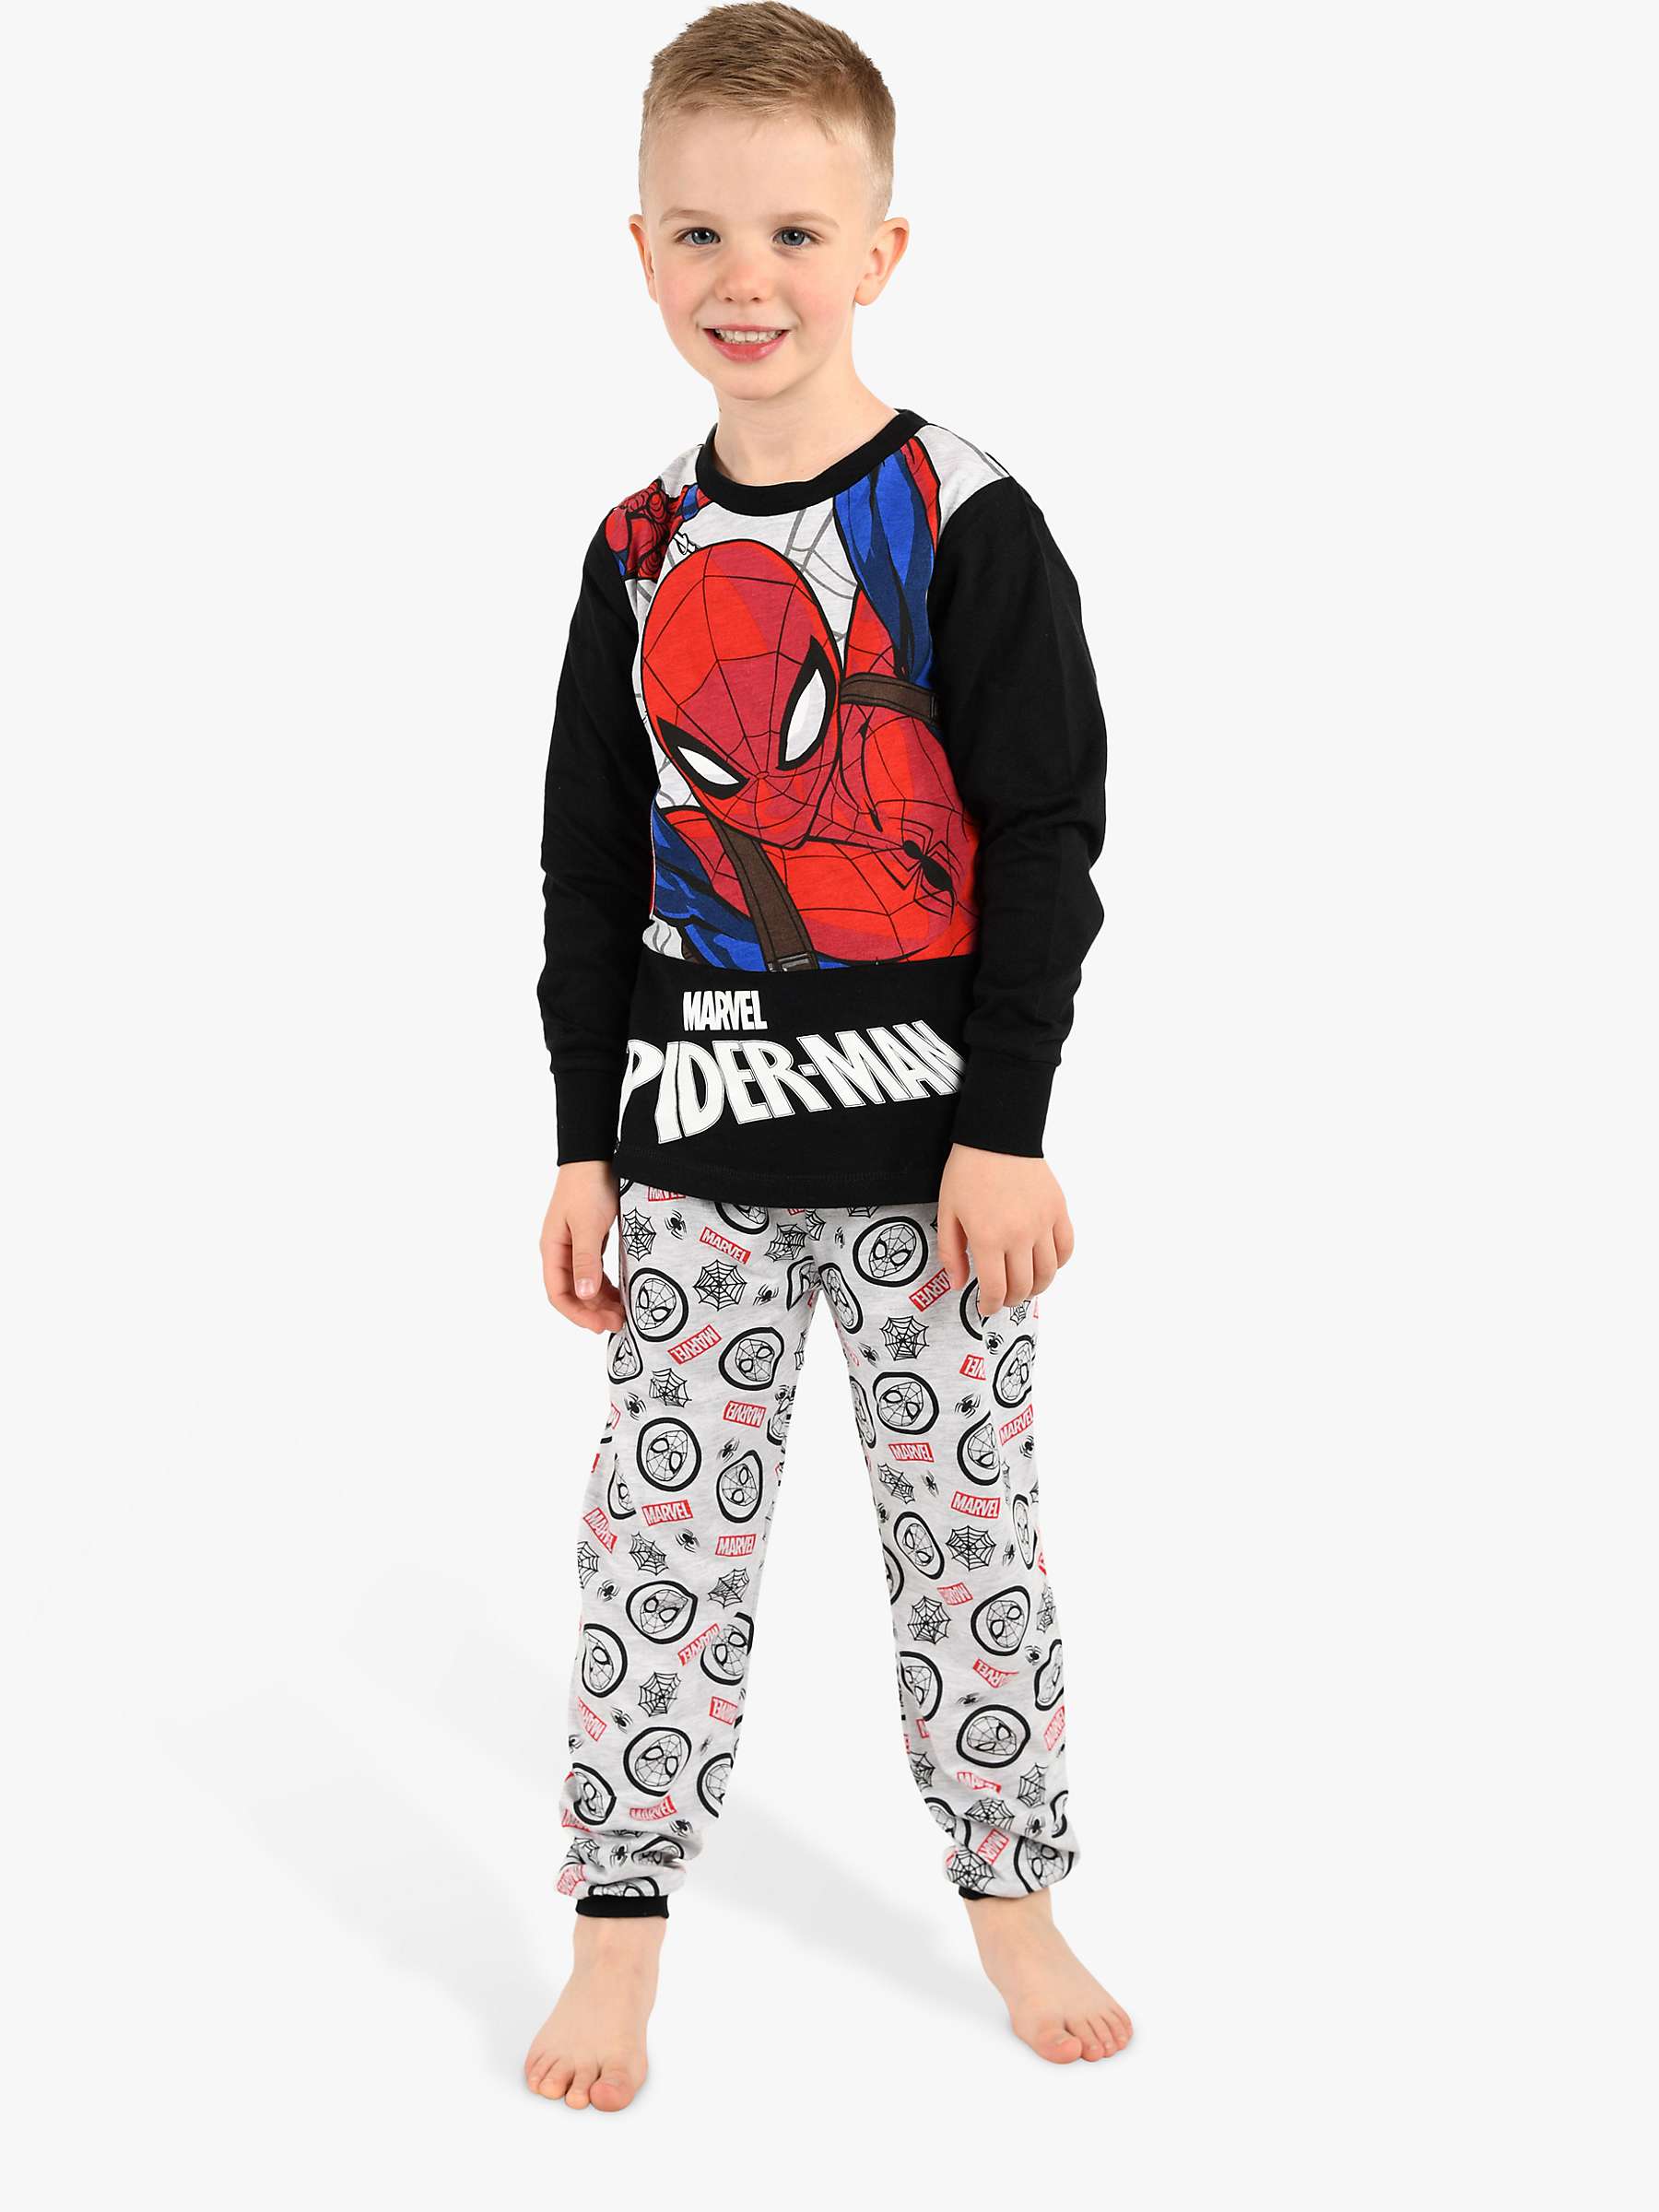 Buy Brand Threads Kids' Spiderman Pyjama Set, Black Multi Online at johnlewis.com